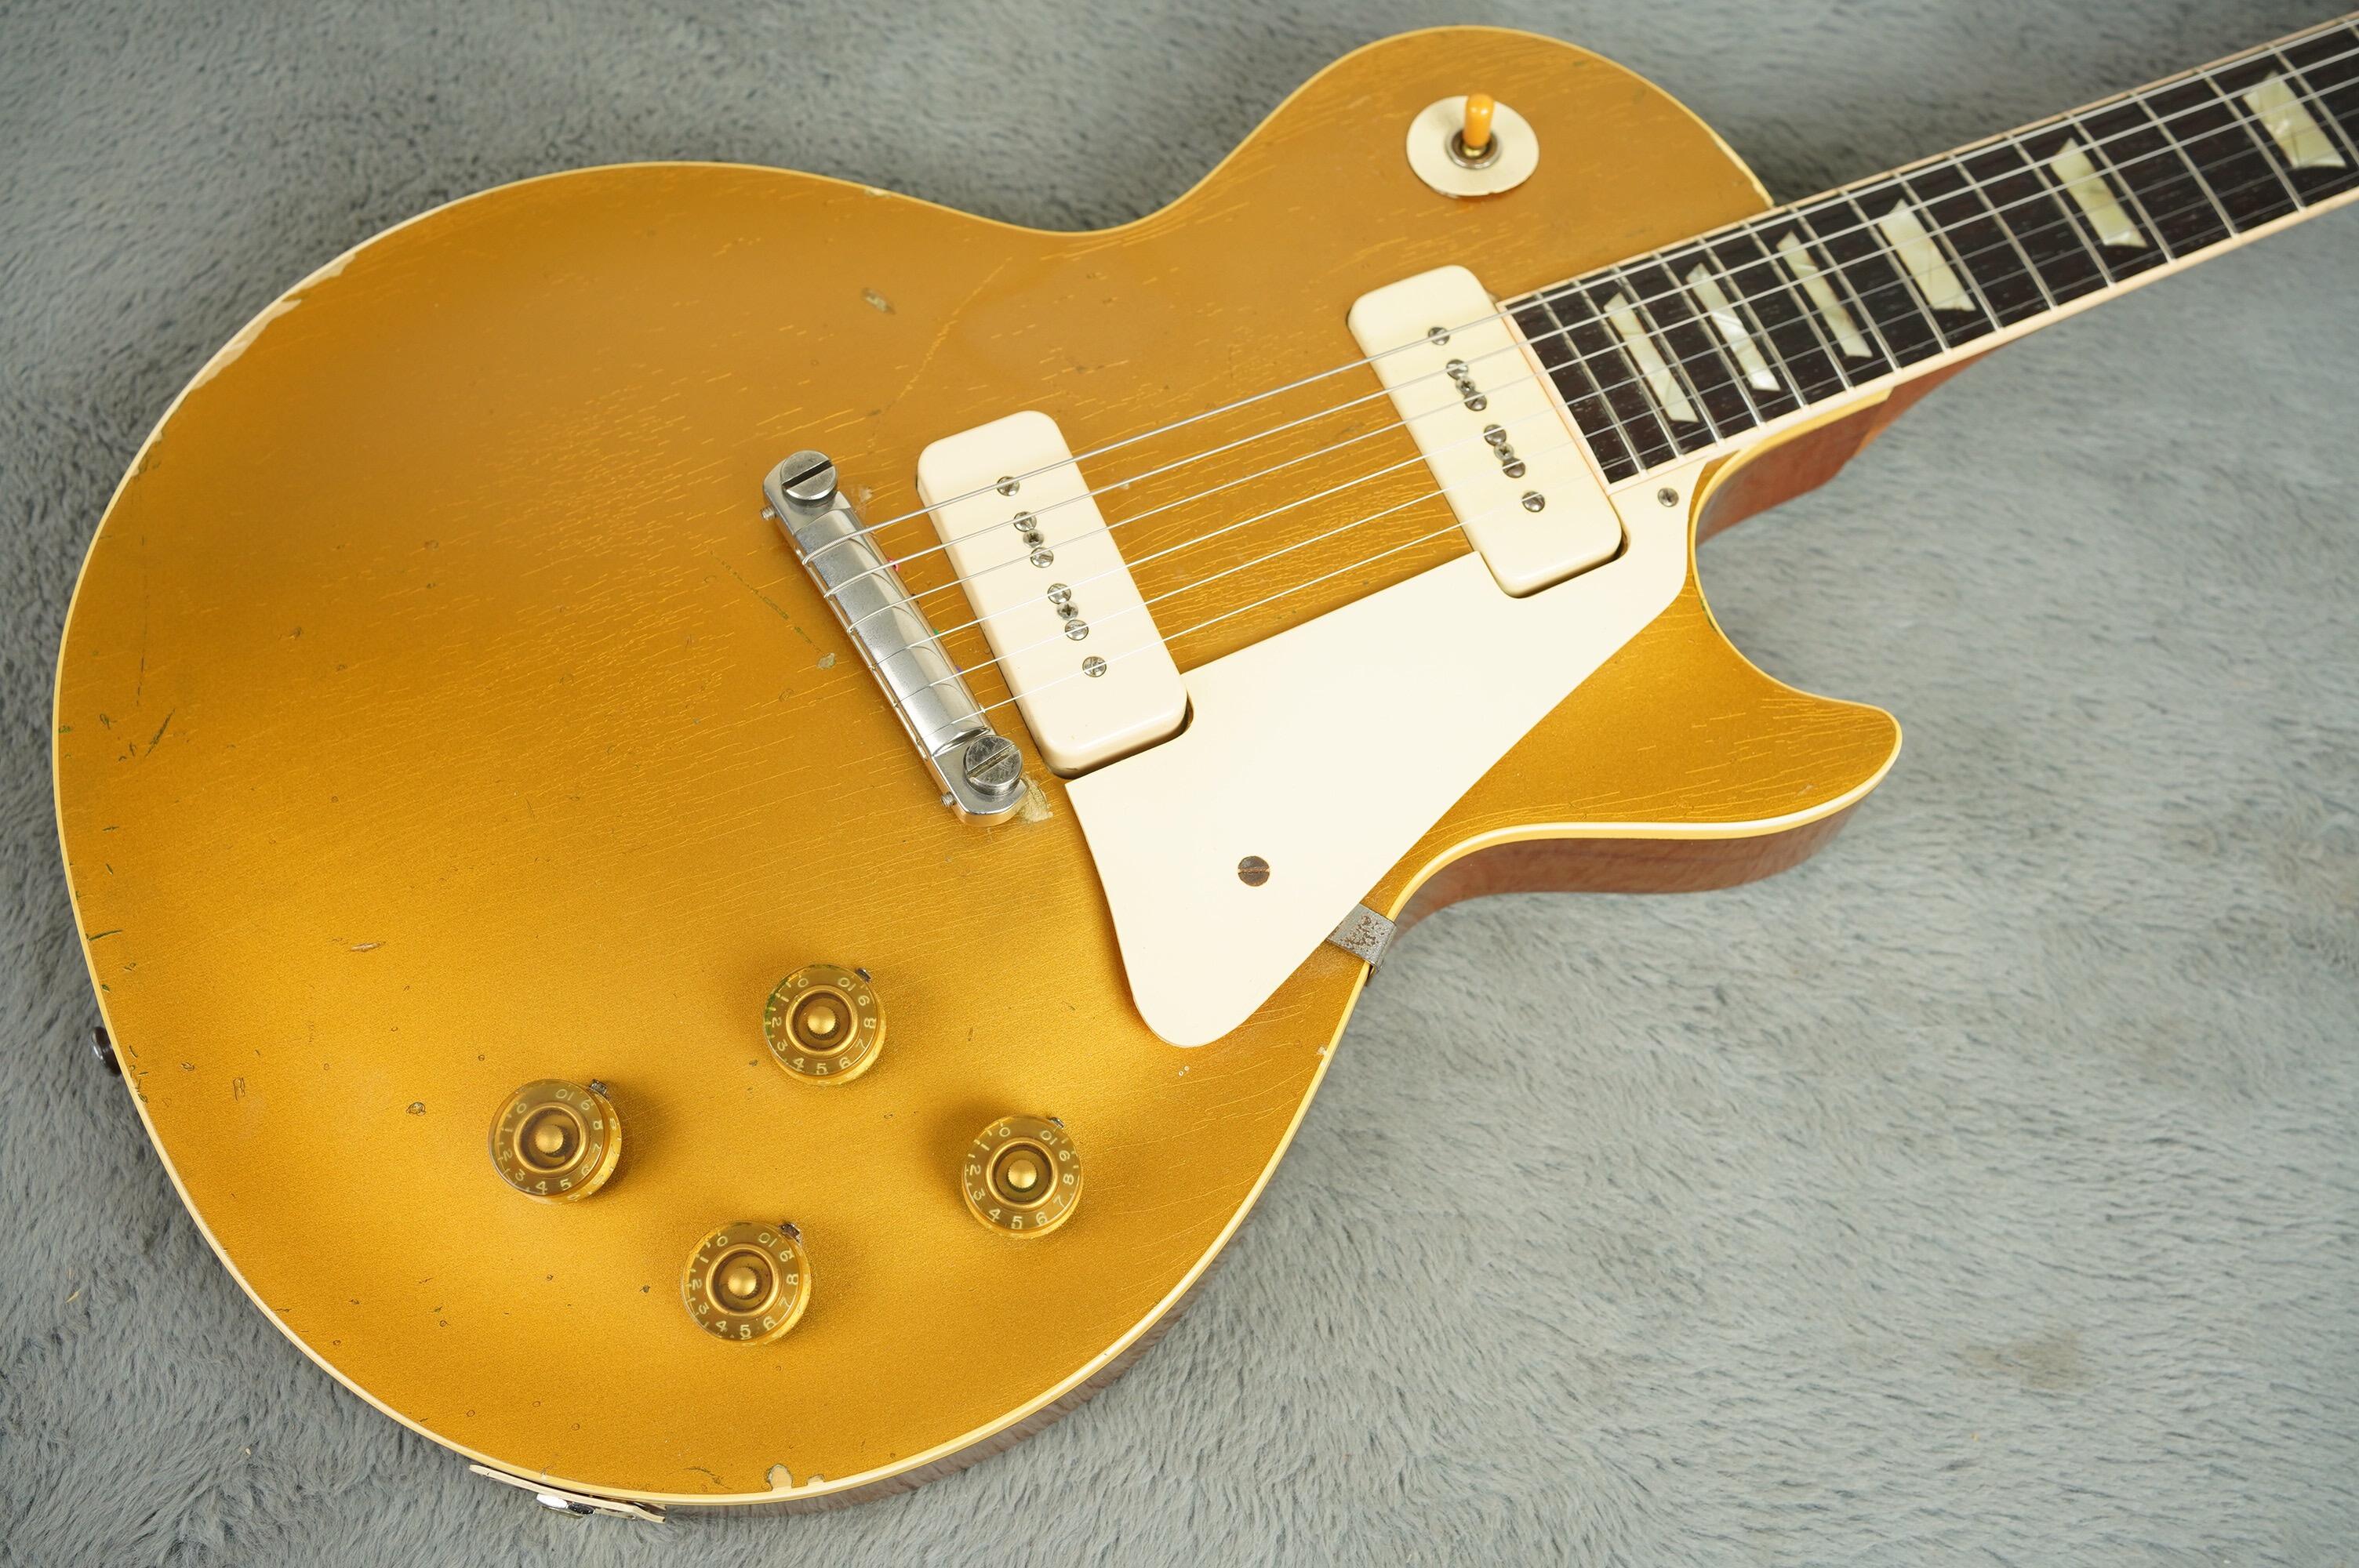 1954 Gibson Les Paul Standard neck refin